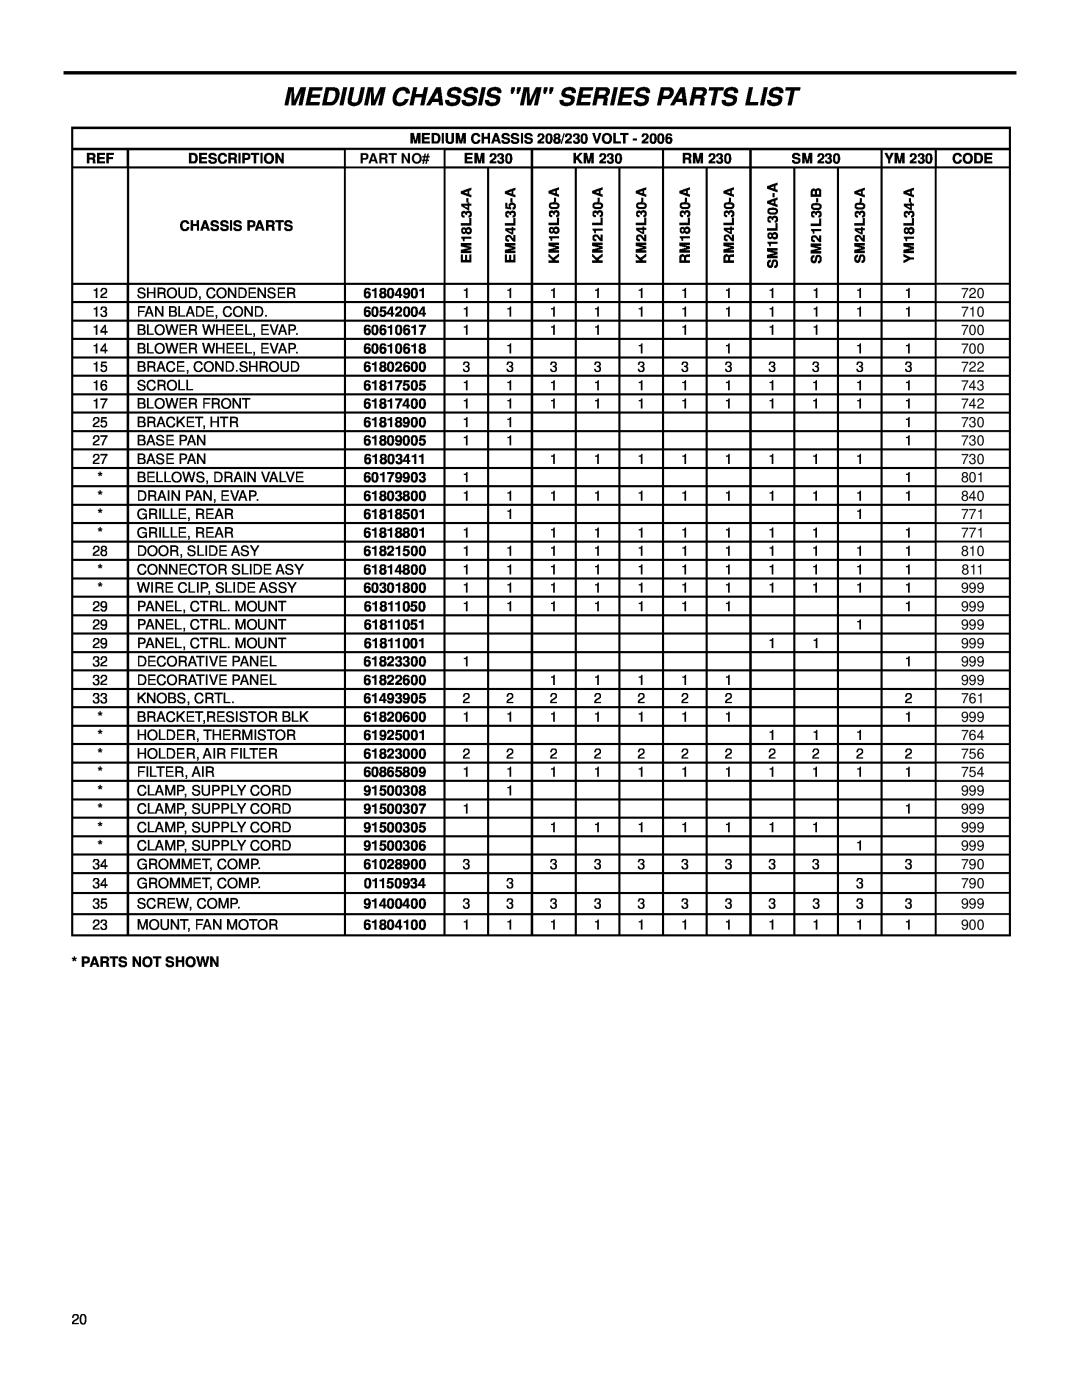 Friedrich 2006 manual Medium Chassis M Series Parts List, Shroud, Condenser 